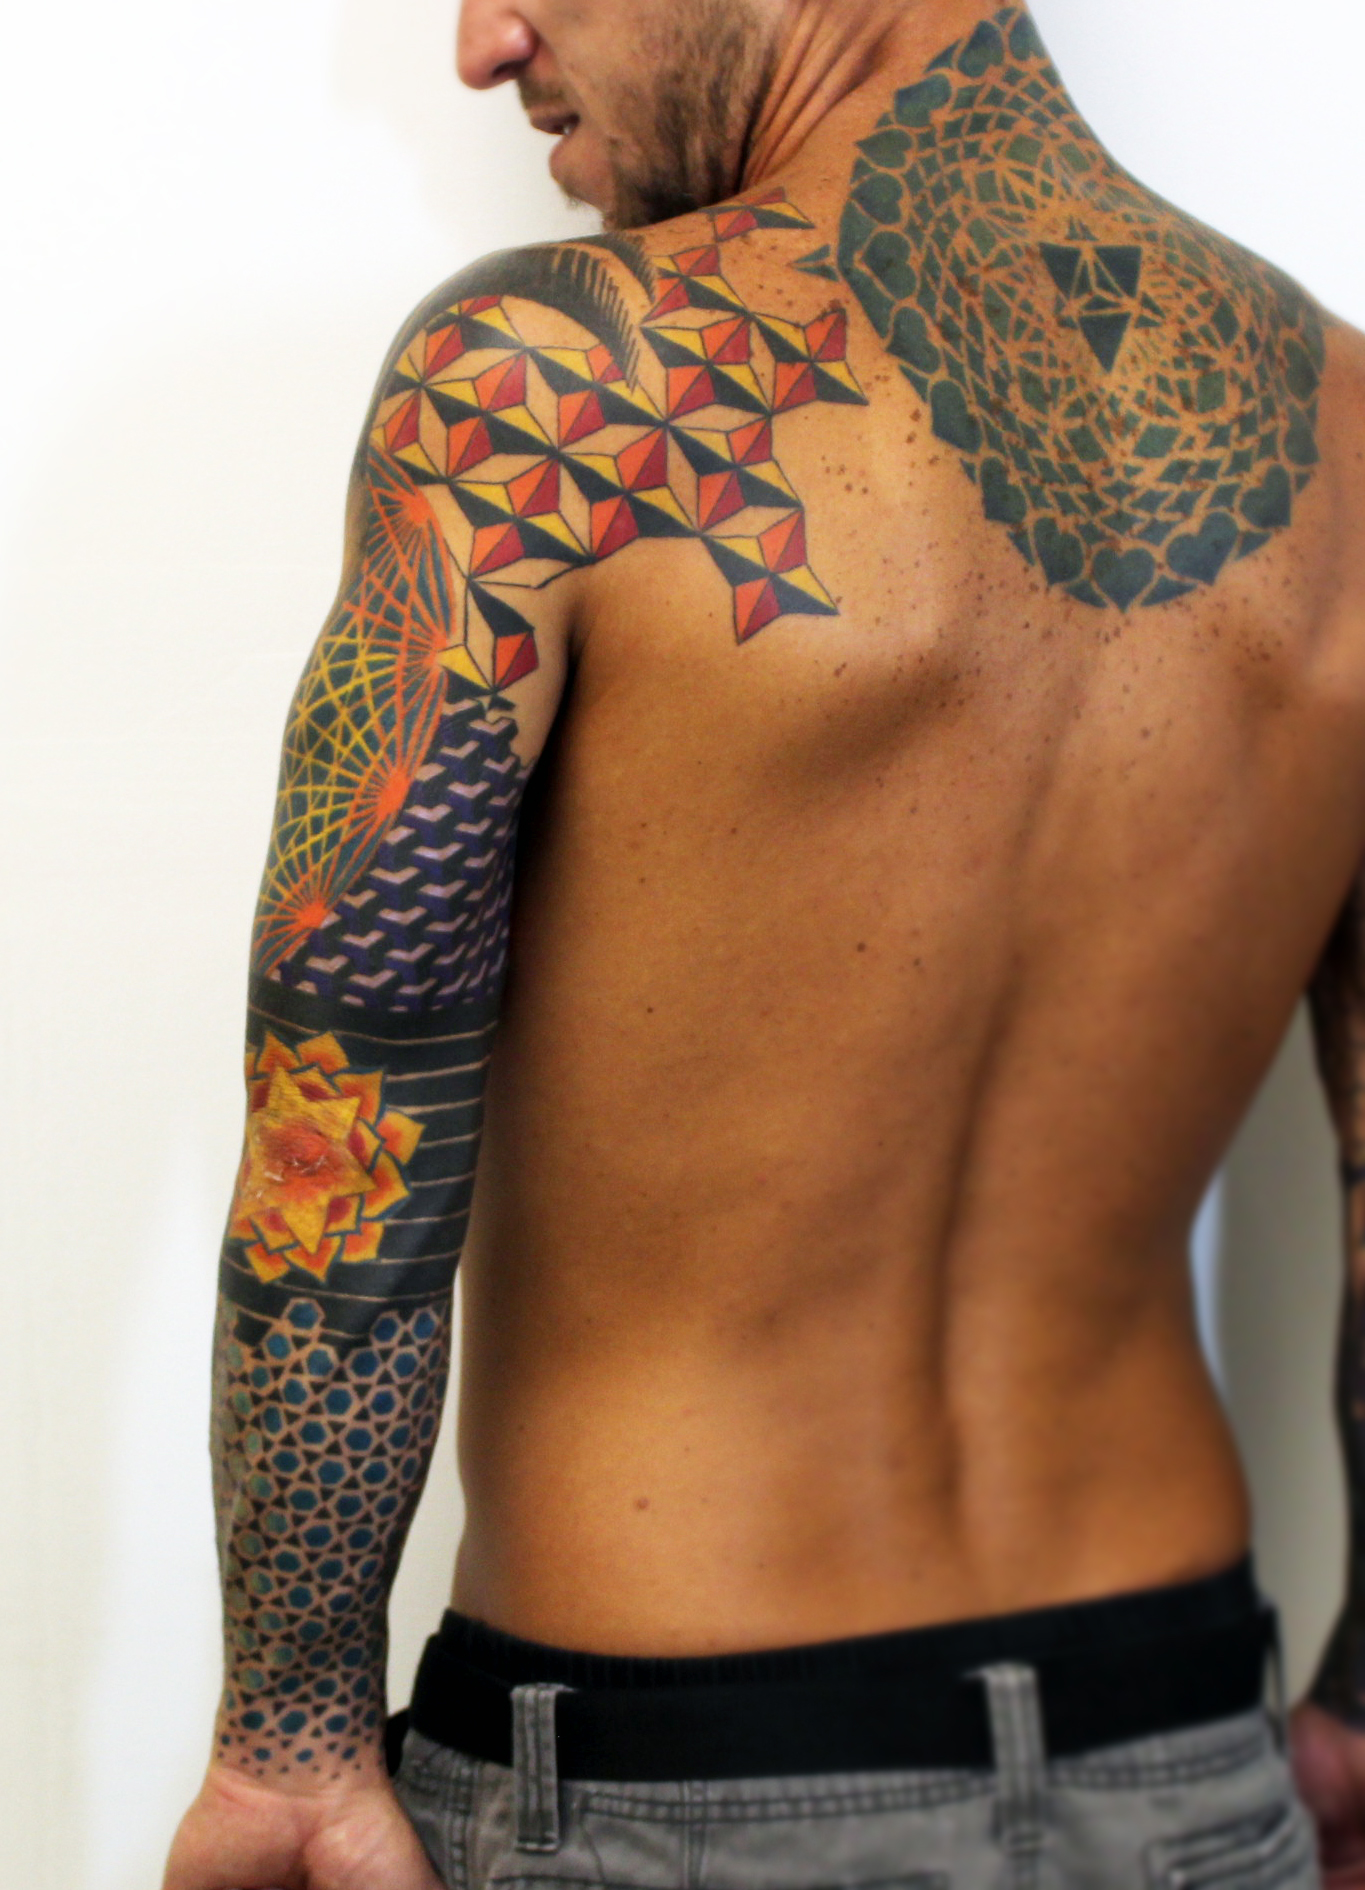 Shoulder Side Dotwork Geometric Tattoo by Nissaco